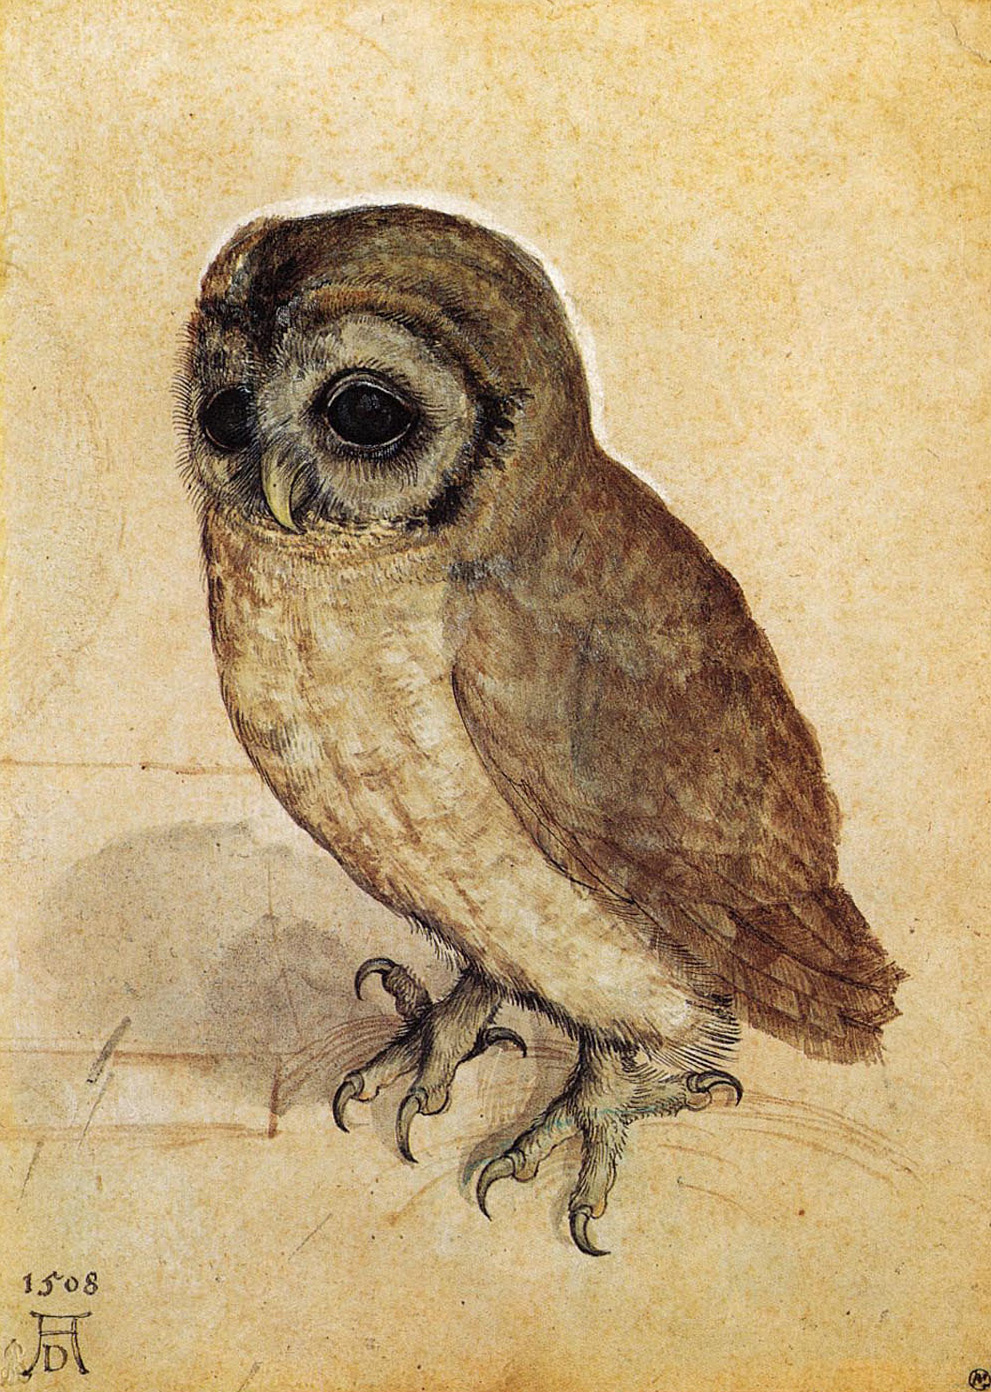 albrecht-durer-the-little-owl-1506-trivium-art-history.jpg